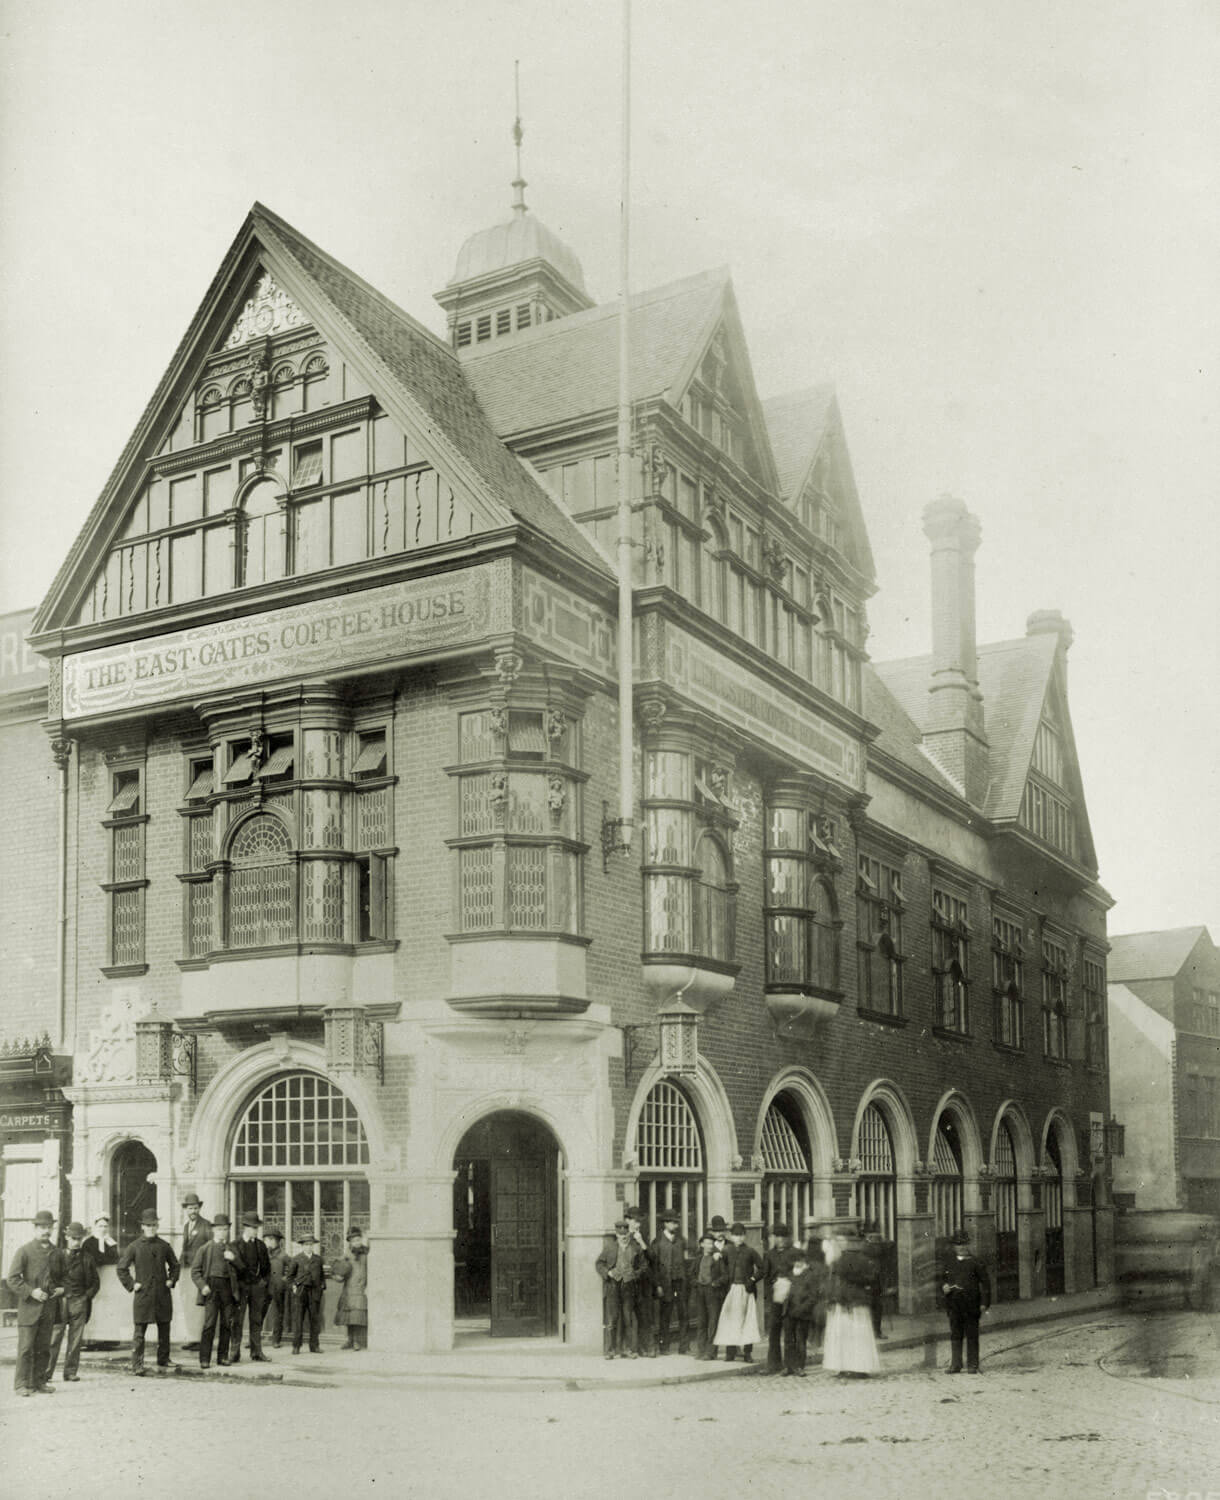 East Gates Coffee House circa 1900 -